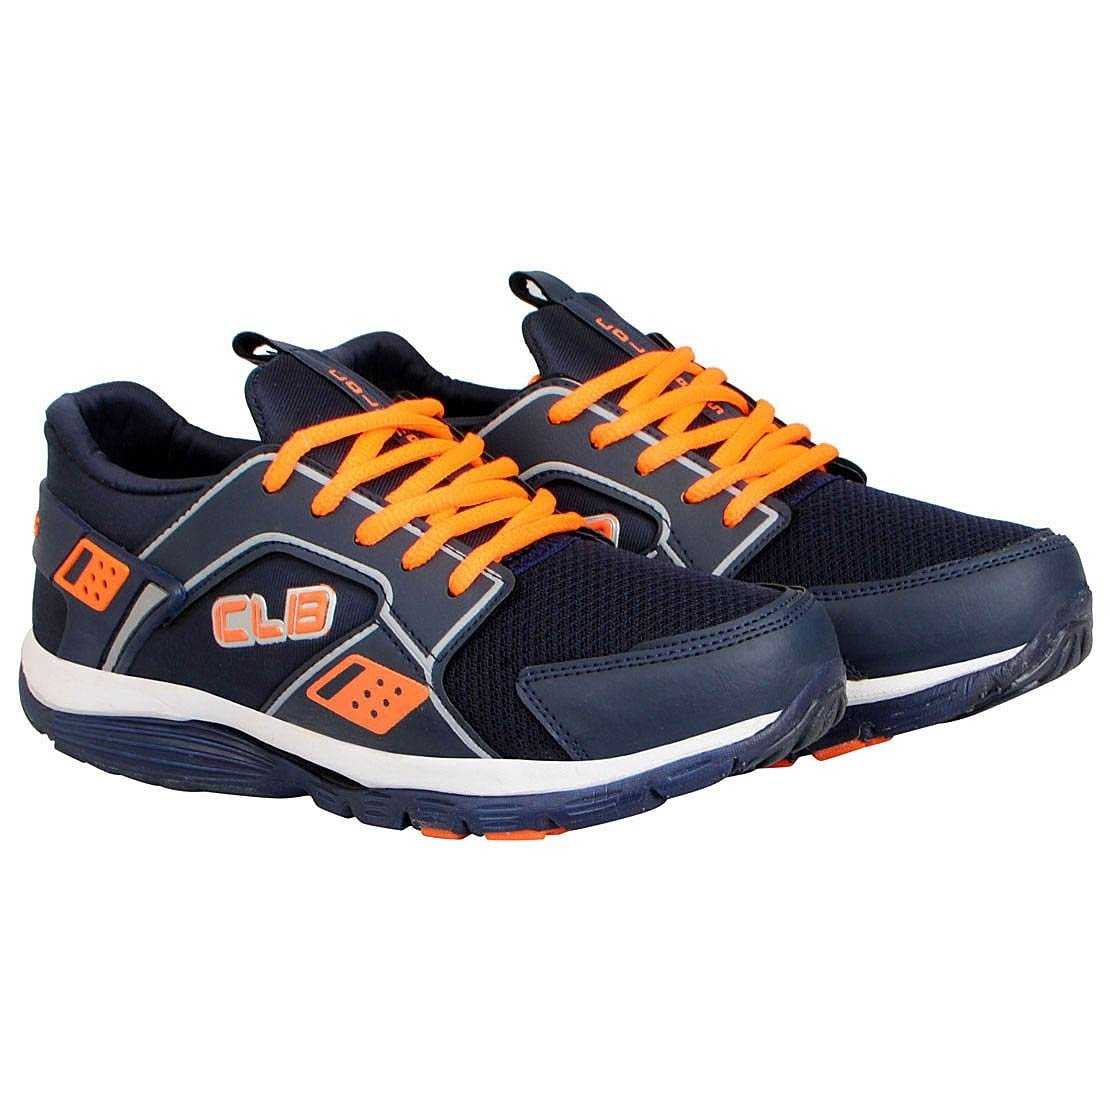 Mesh Columbus Sports Shoes, Size : 6-10 UK, Color : Blue at Rs 1,499 / Pair  in Uttar Pradesh